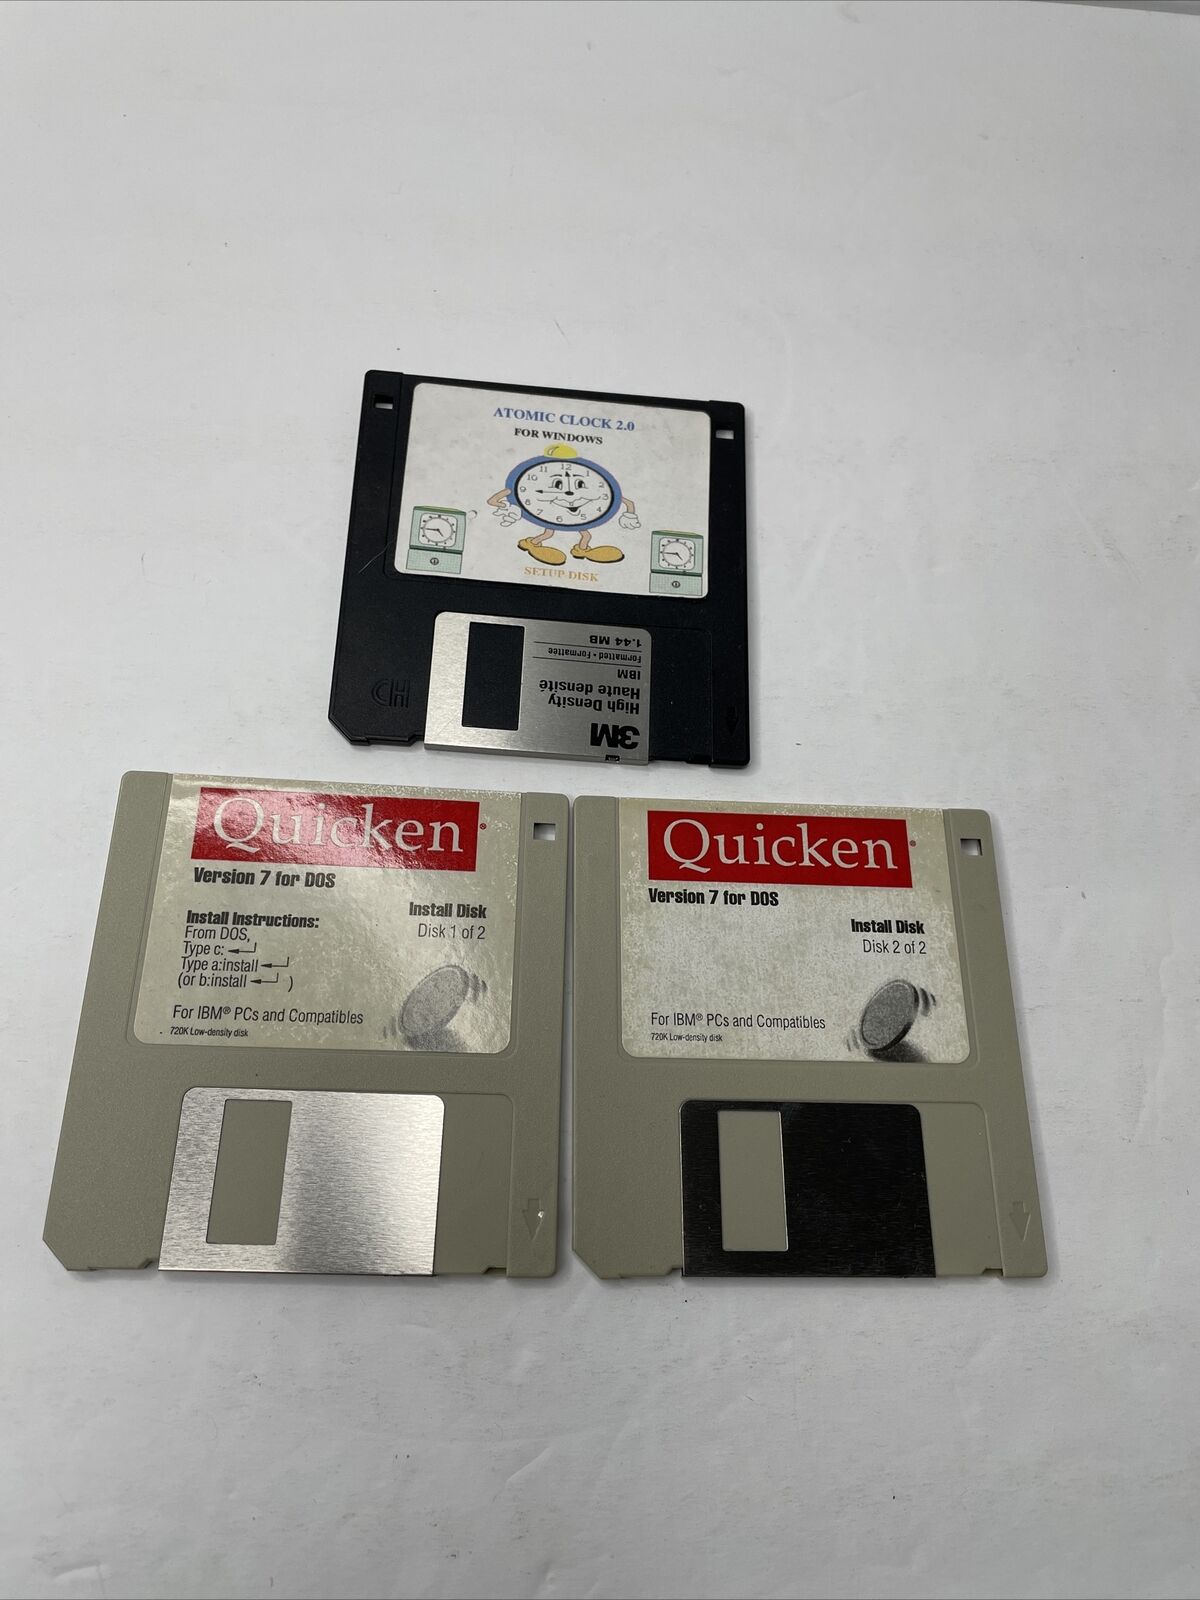 Quicken 7 for DOS -Floppy Disks- 2 pcs + Atomic Clock 2.0 For Windows Setup Disk